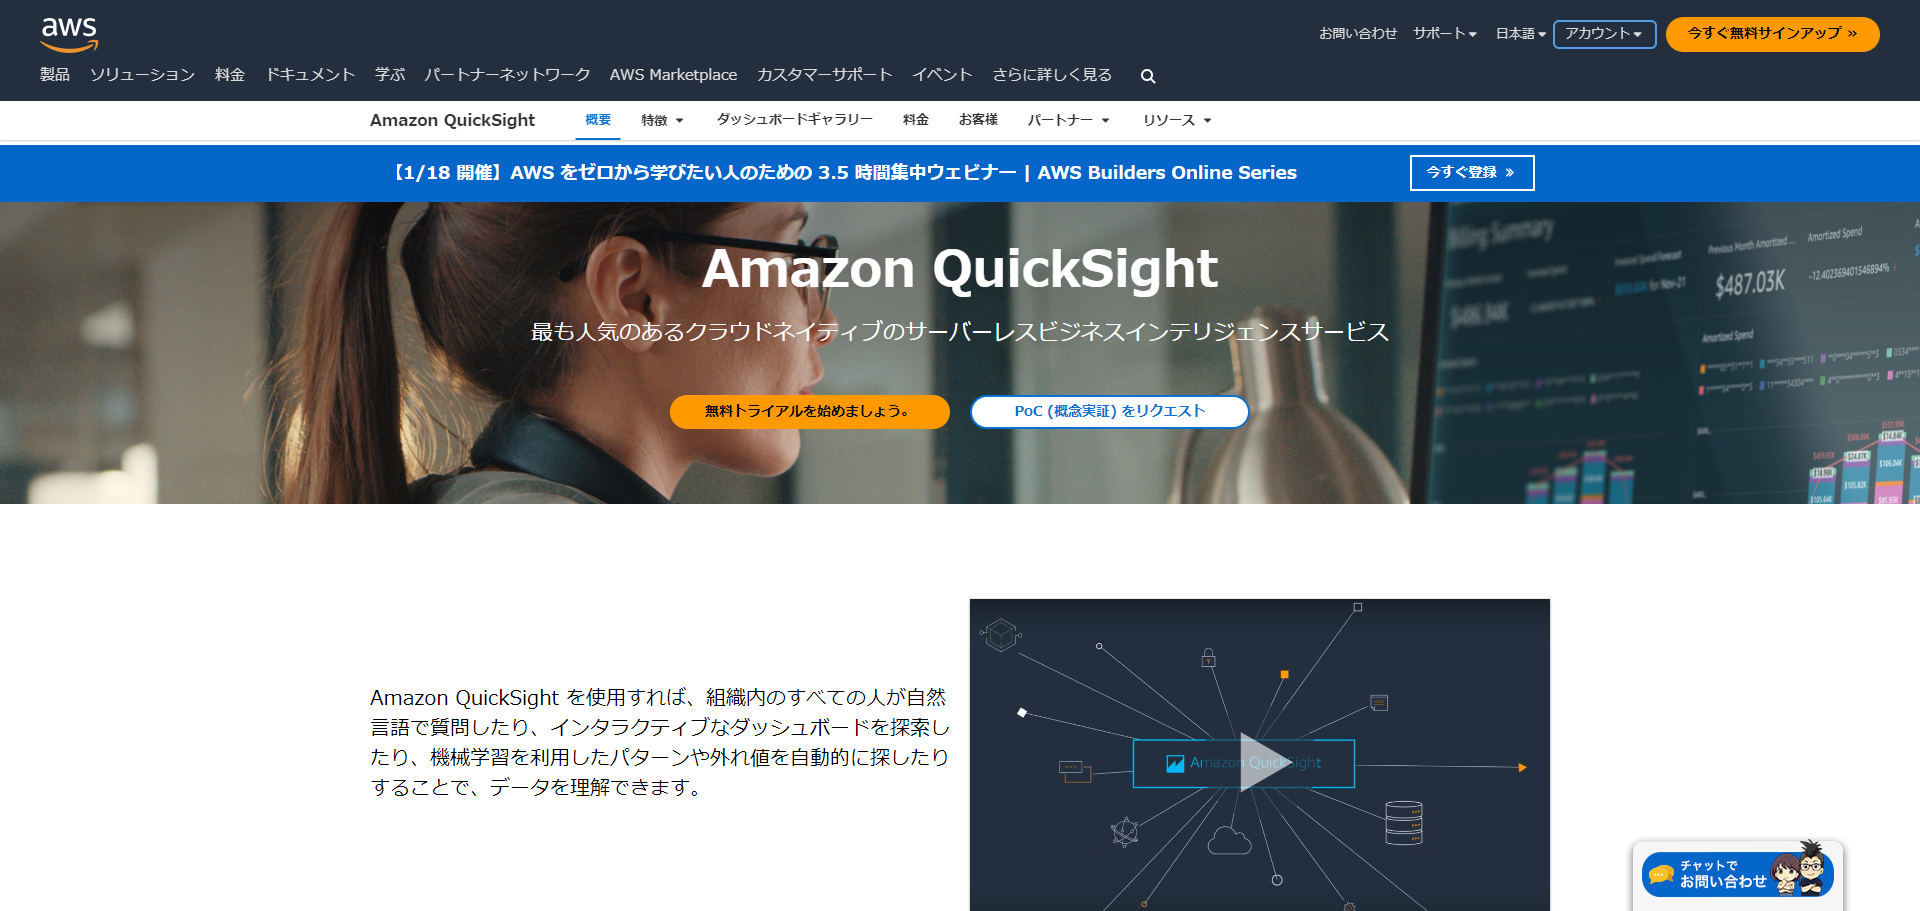 Amazon QuickSight　AWSで使えるBIツール